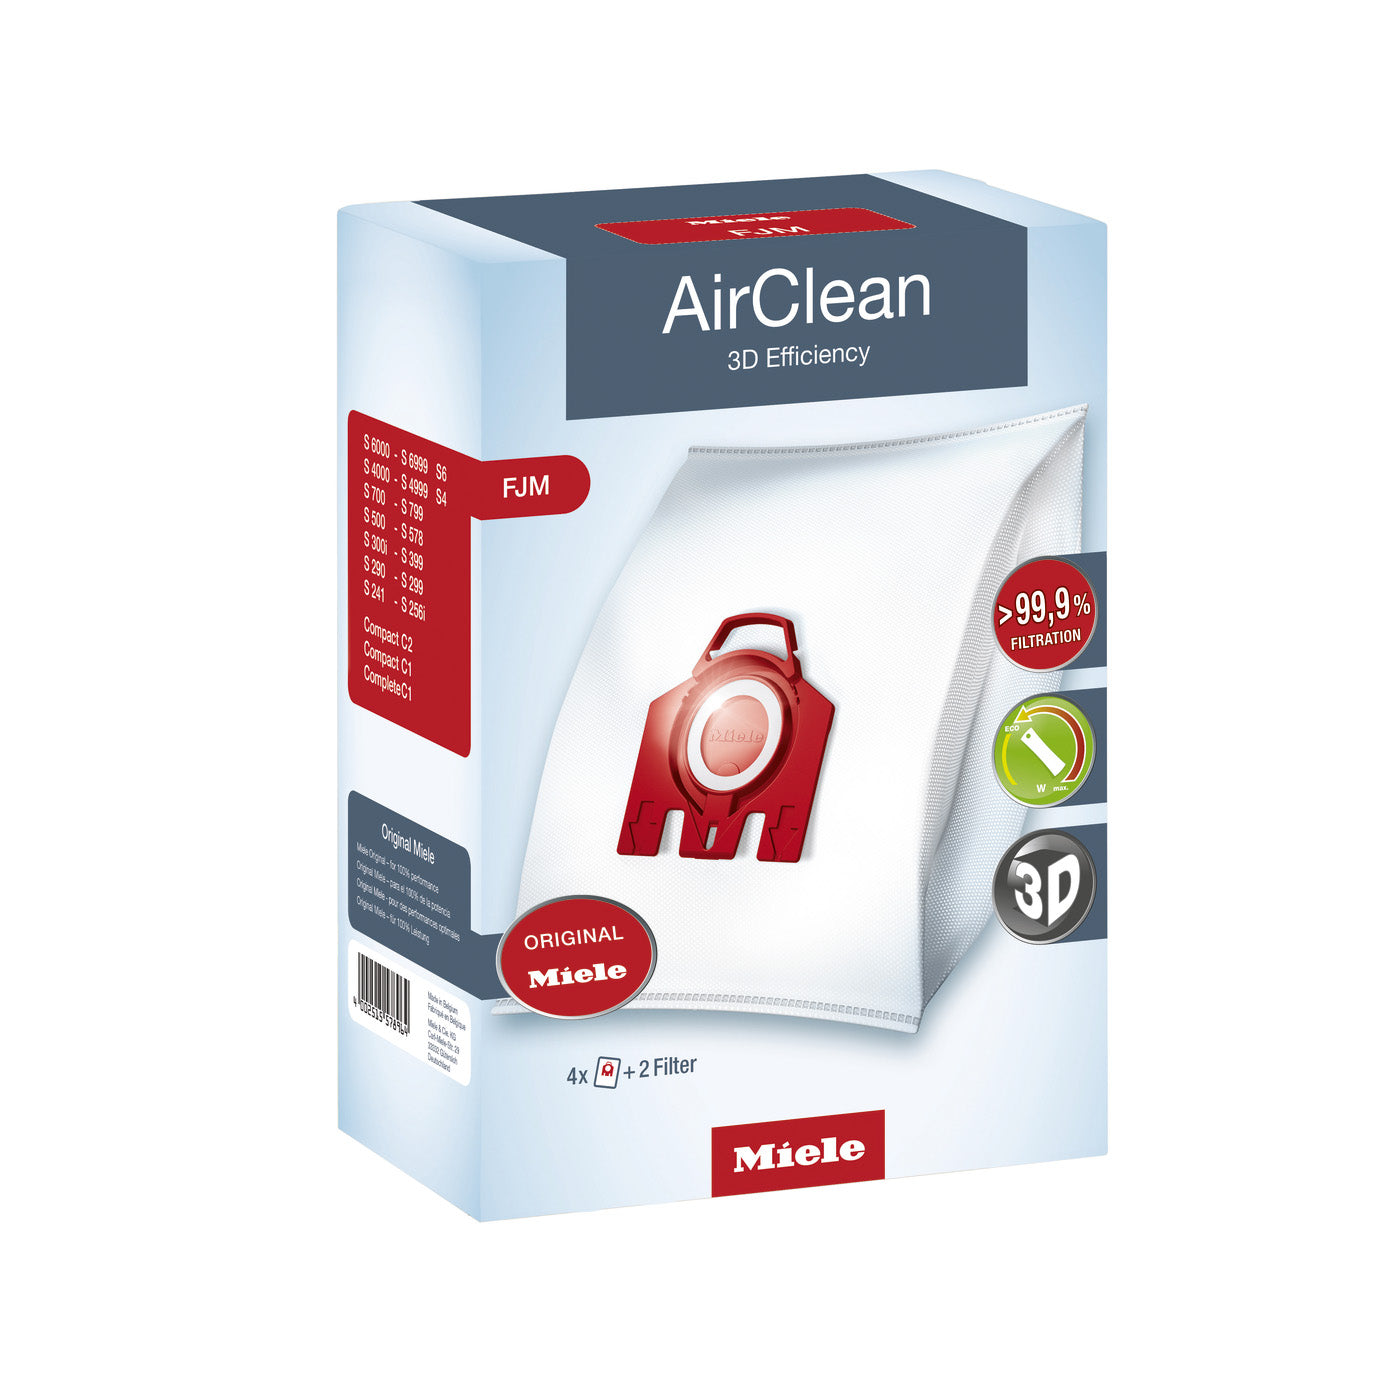 Miele FJM AirClean 3D Efficiency Dustbags 4pk+2 filters Miele Vacuum Plus Canada